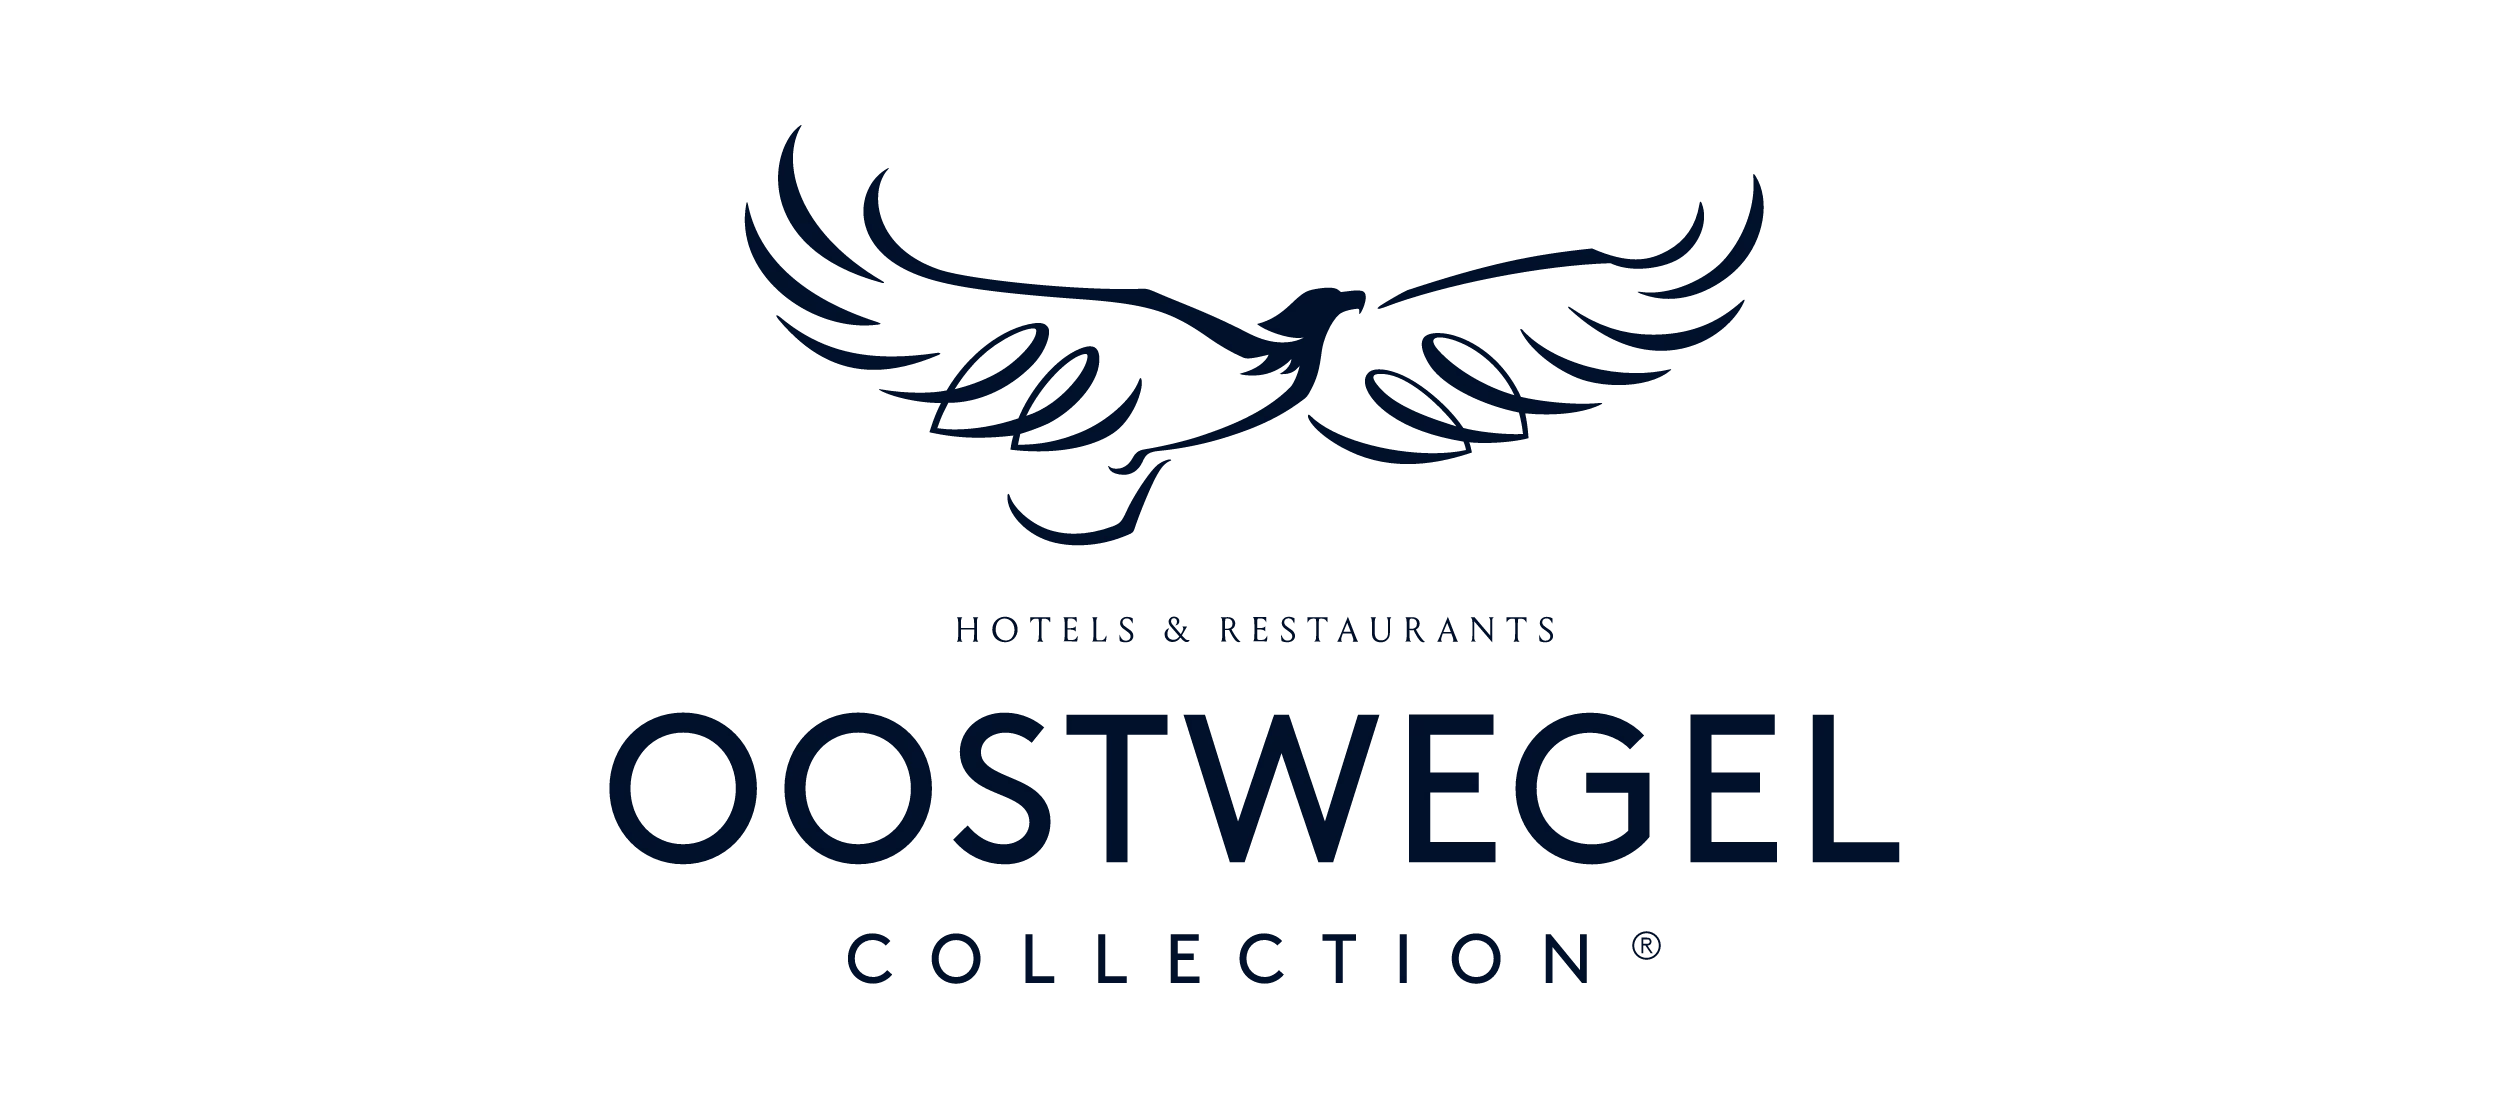 Oostwegel Collection - logo